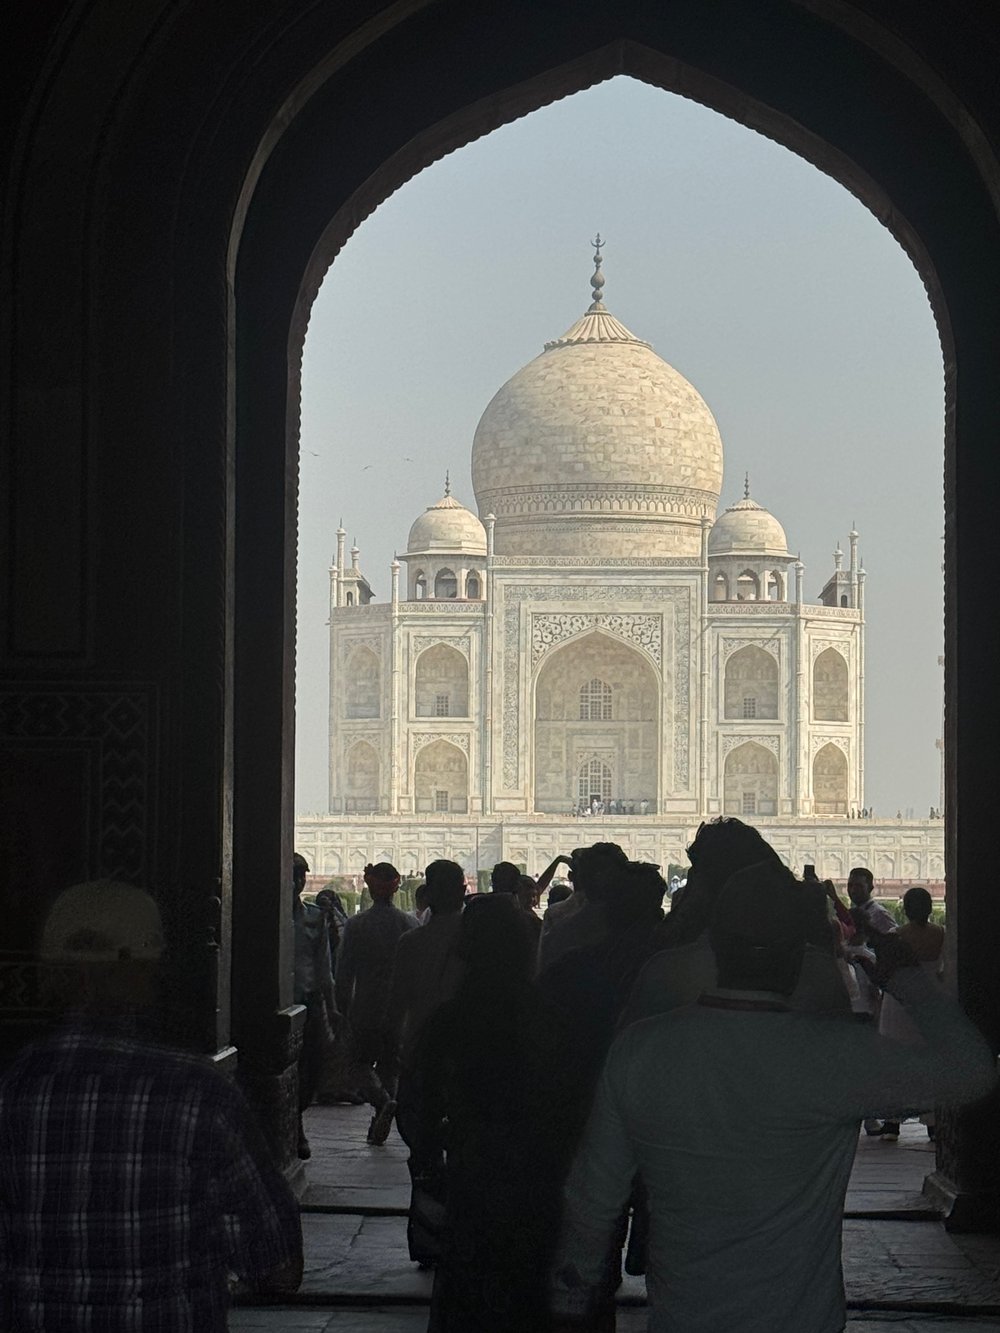 The Taj Mahal, or Love Temple, as my friend says